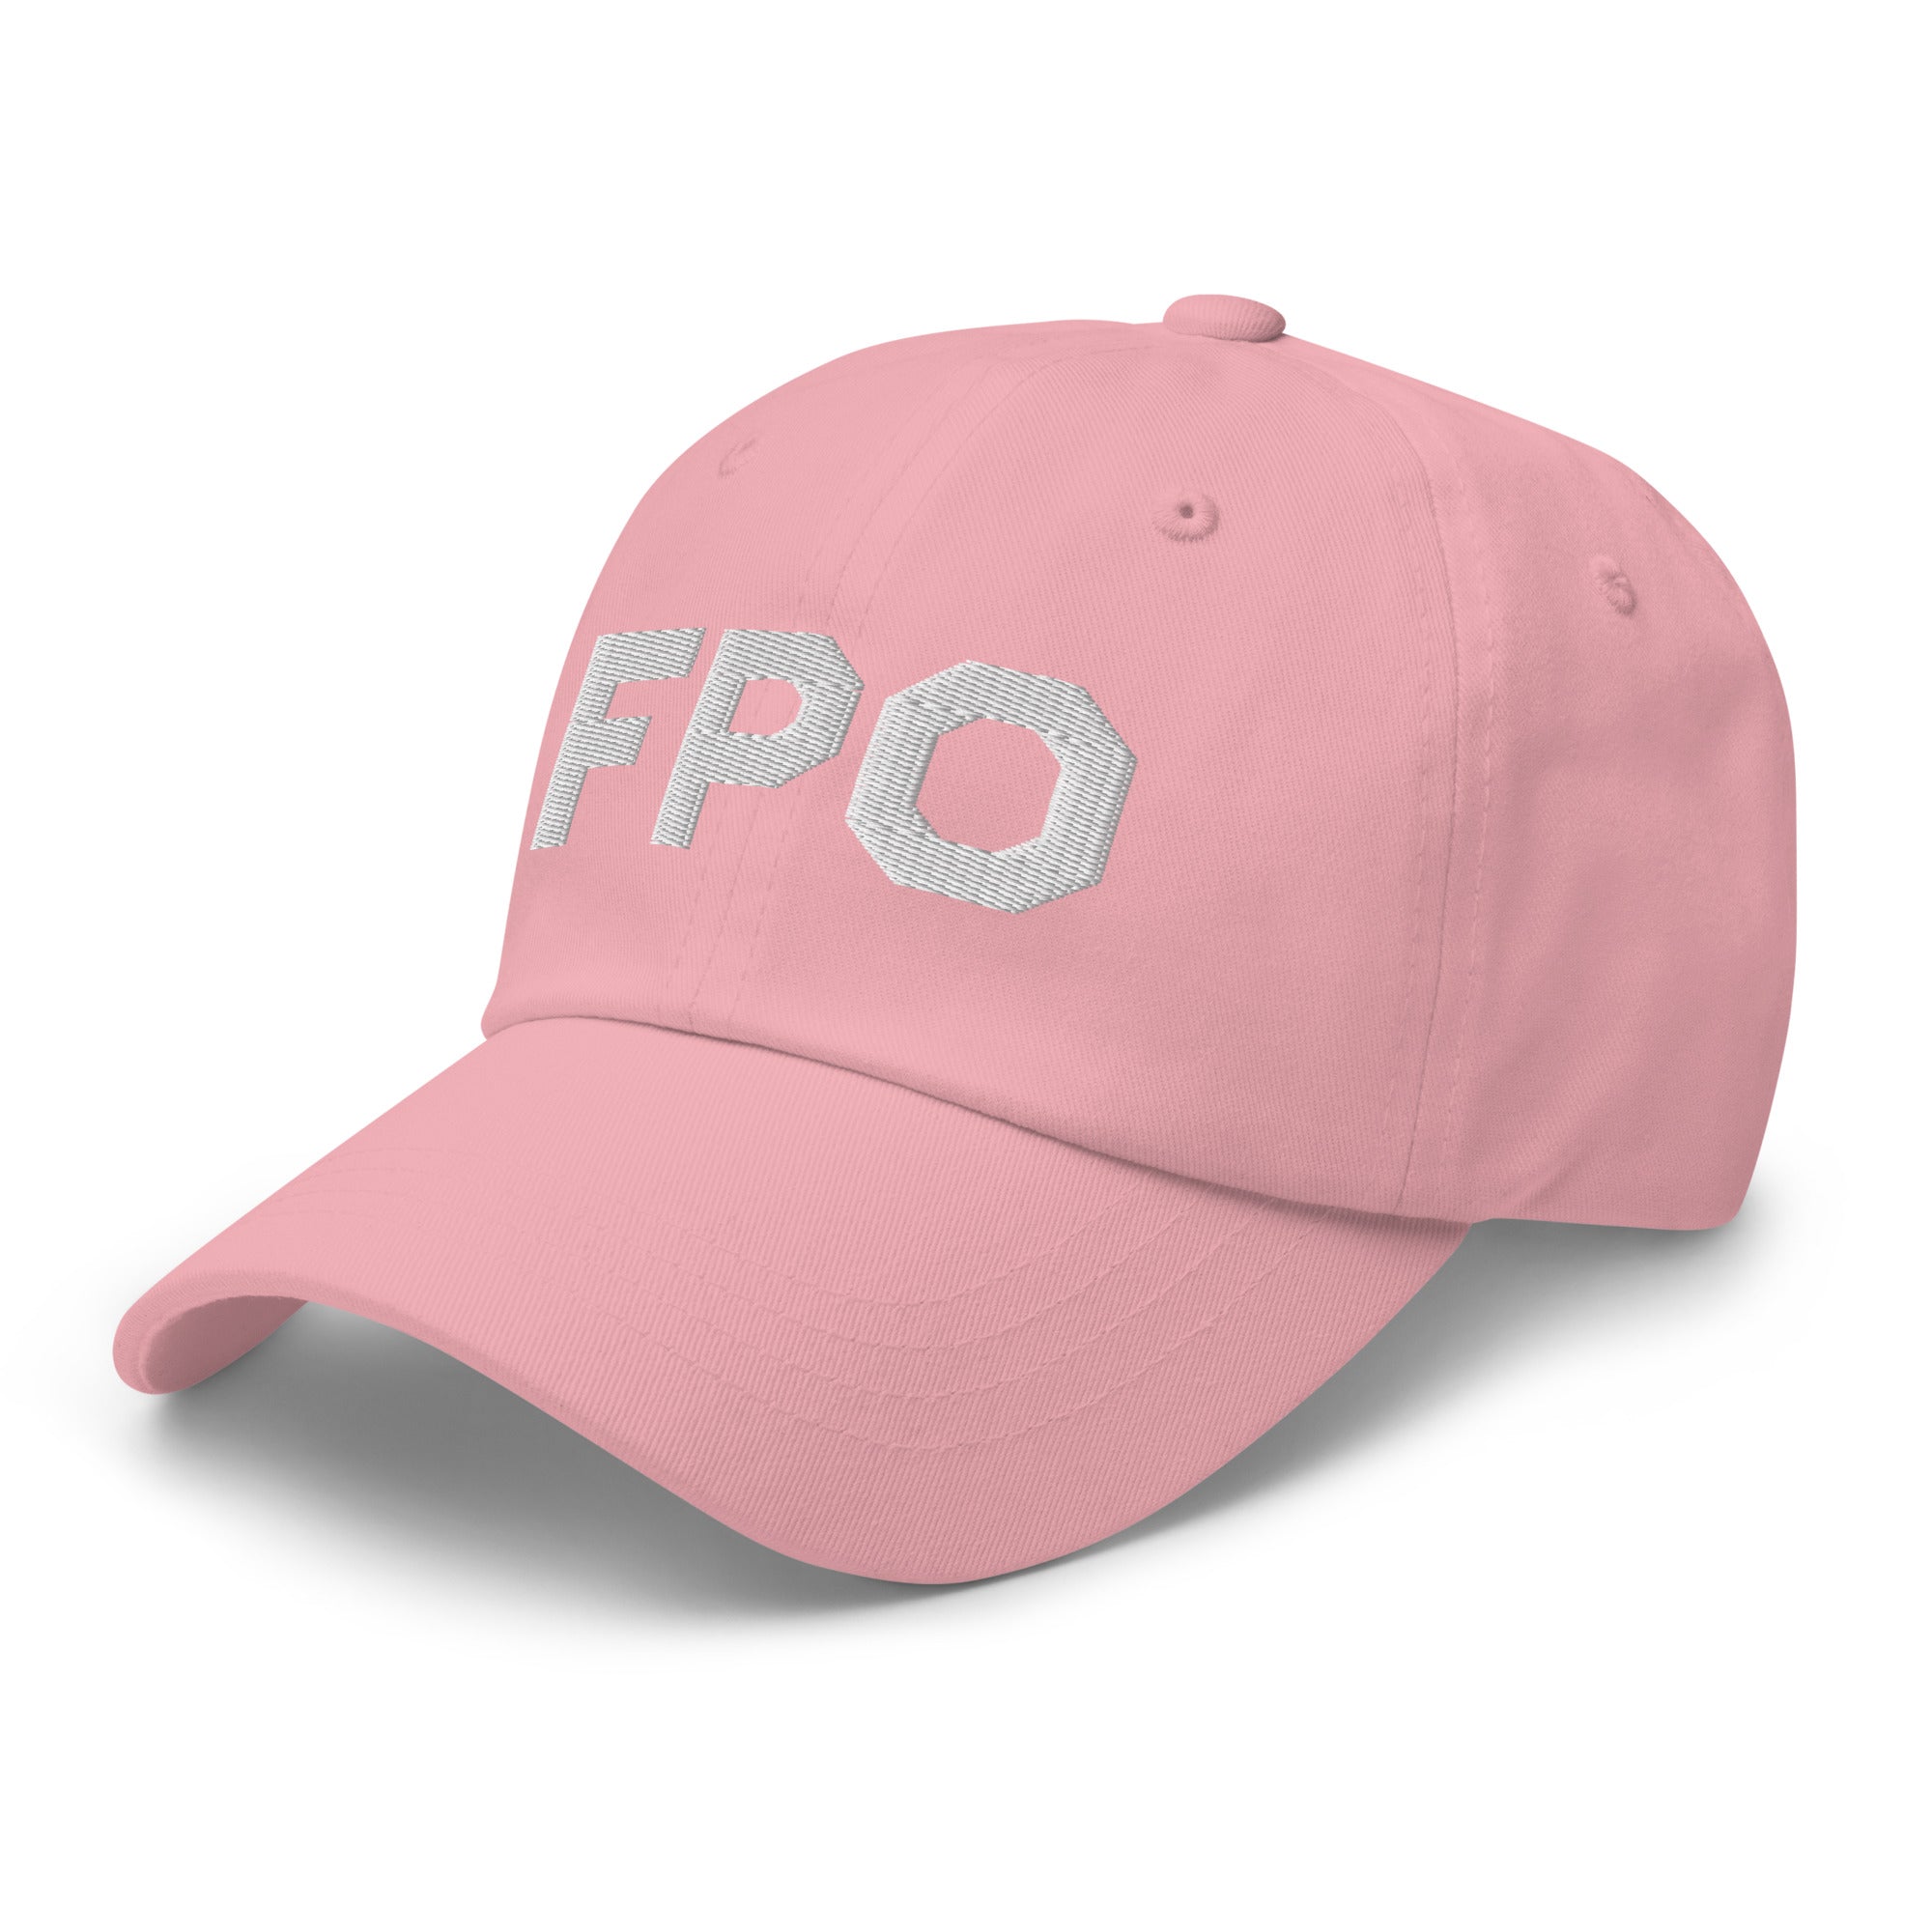 新価格places plus faces cap pink 帽子